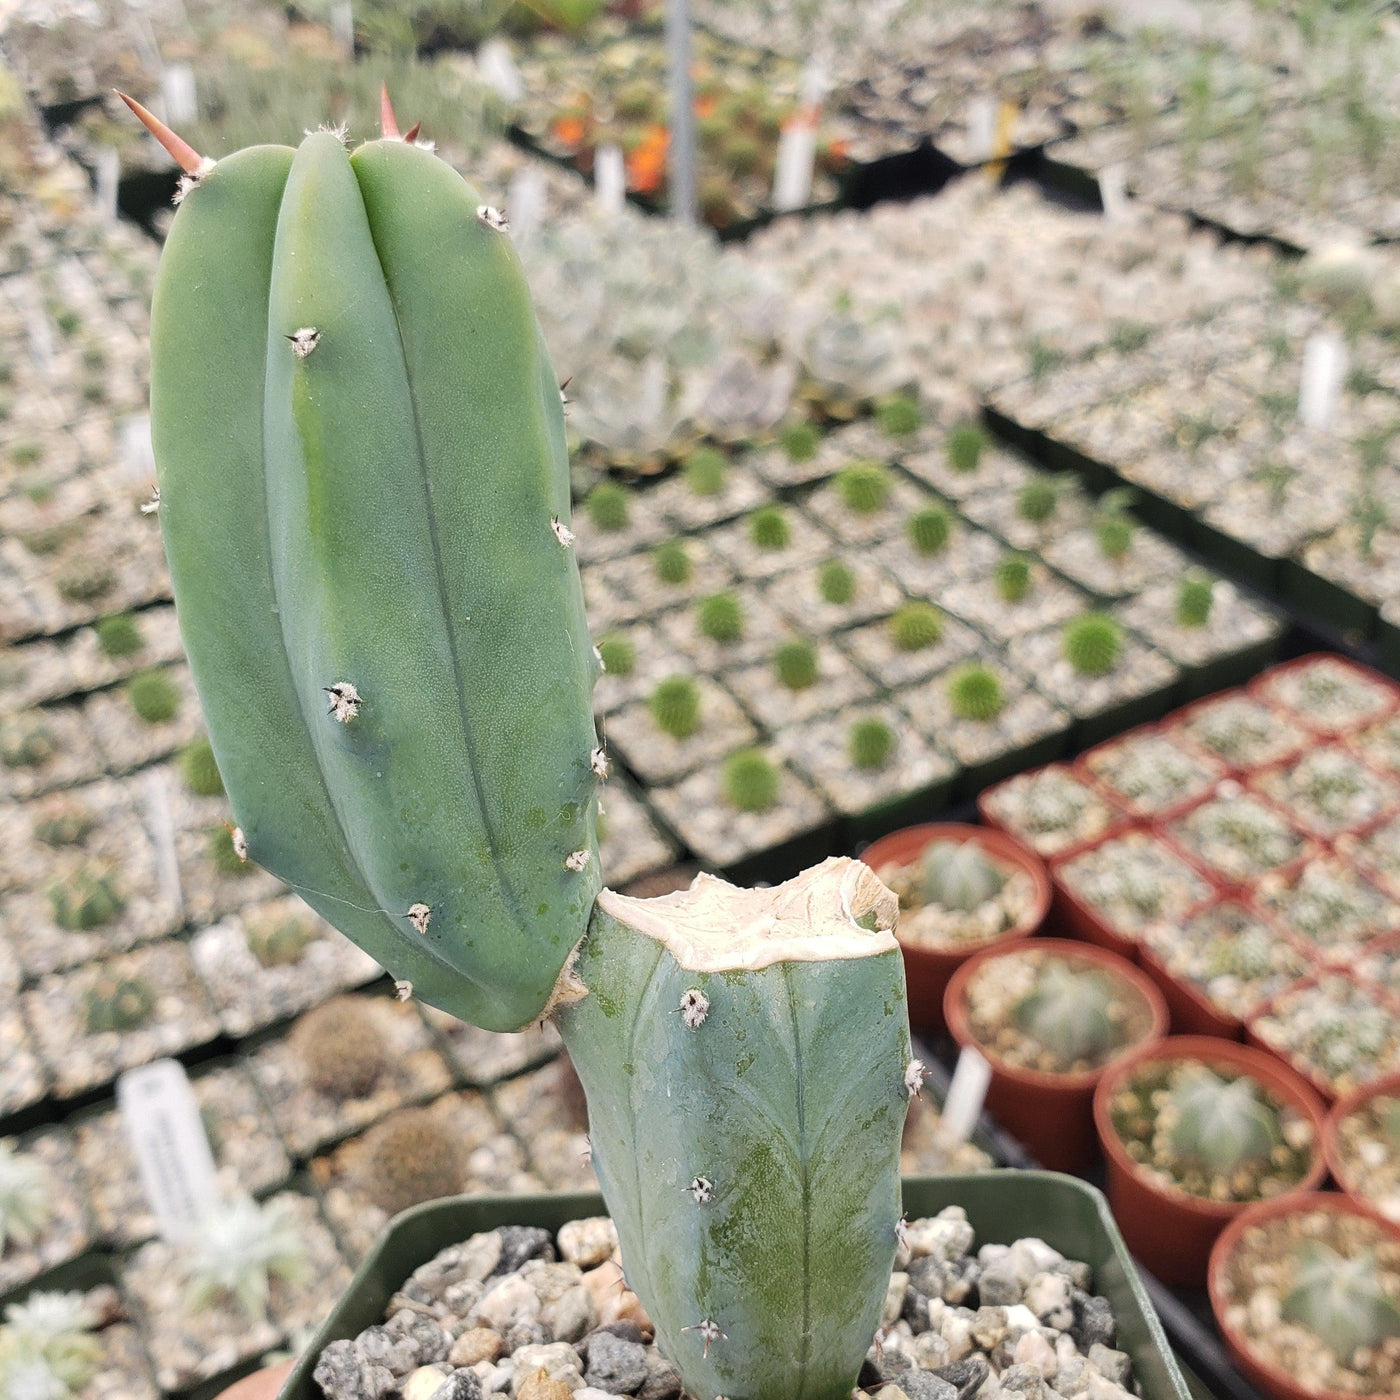 Myrtillocactus geometrizans trimmed